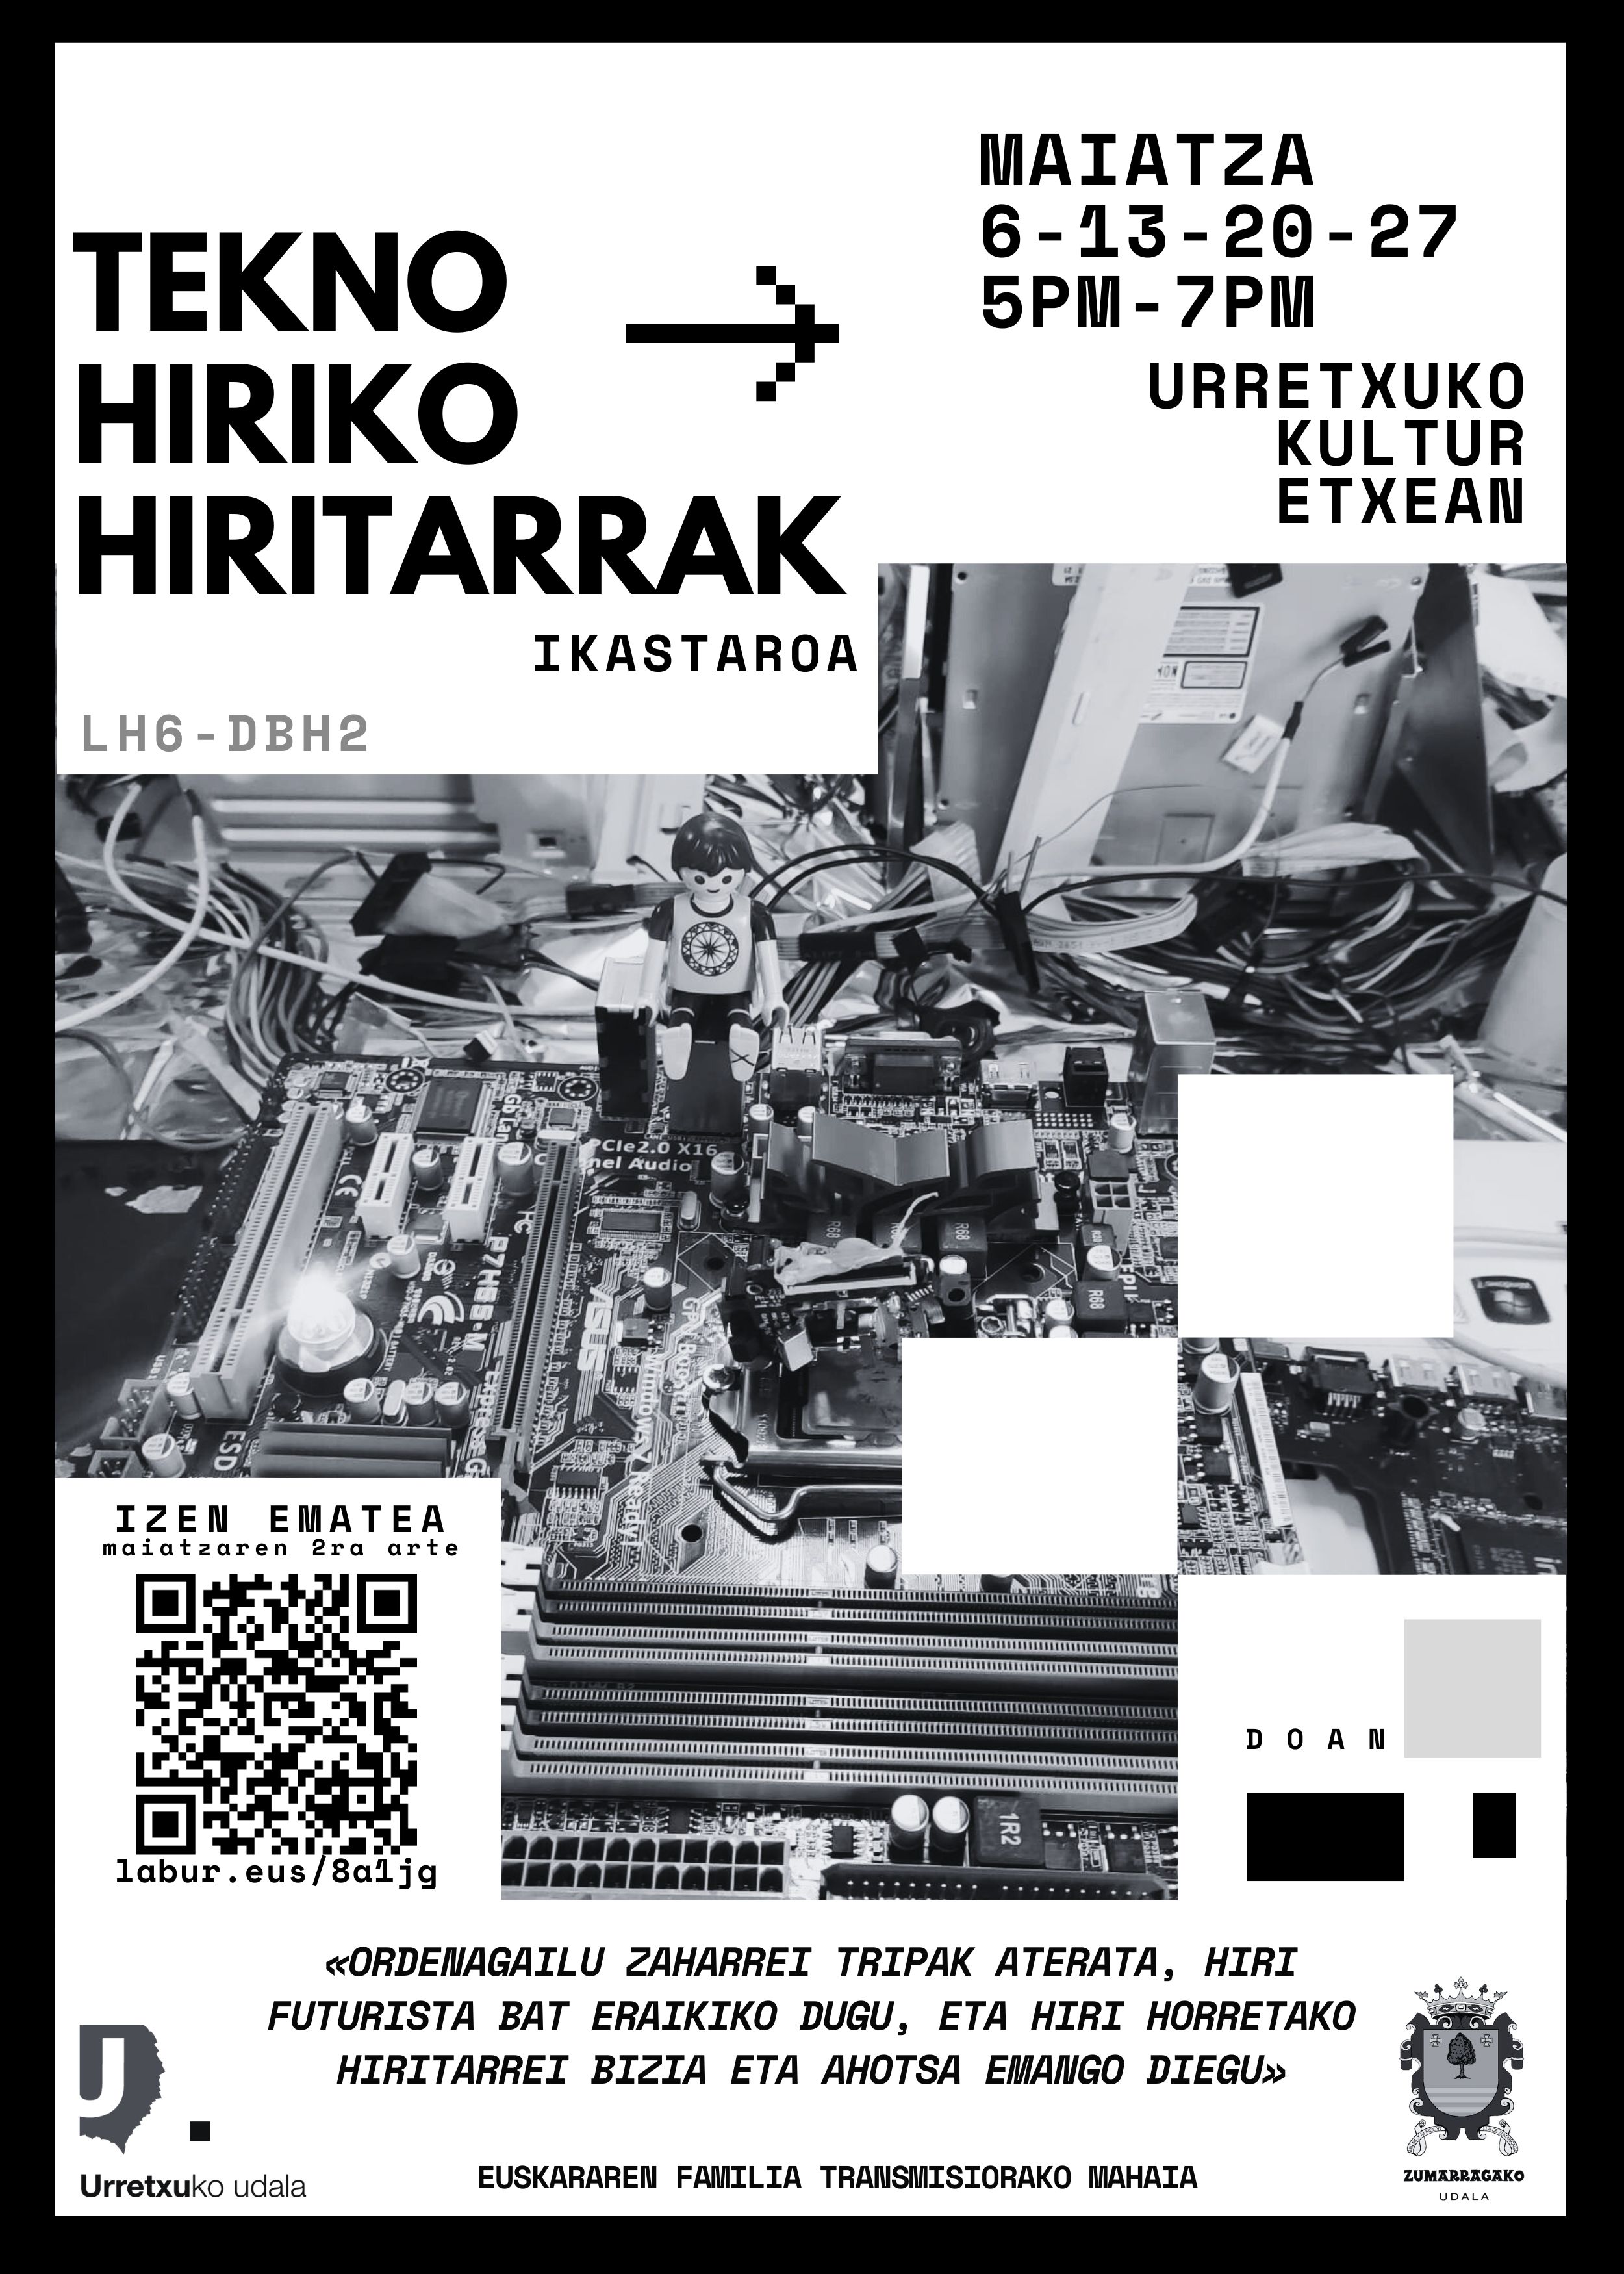 TEKNO HIRIKO HIRITARRAK, un curso innovador dirigido a adolescentes de 6º de Primaria a 2º de ESO